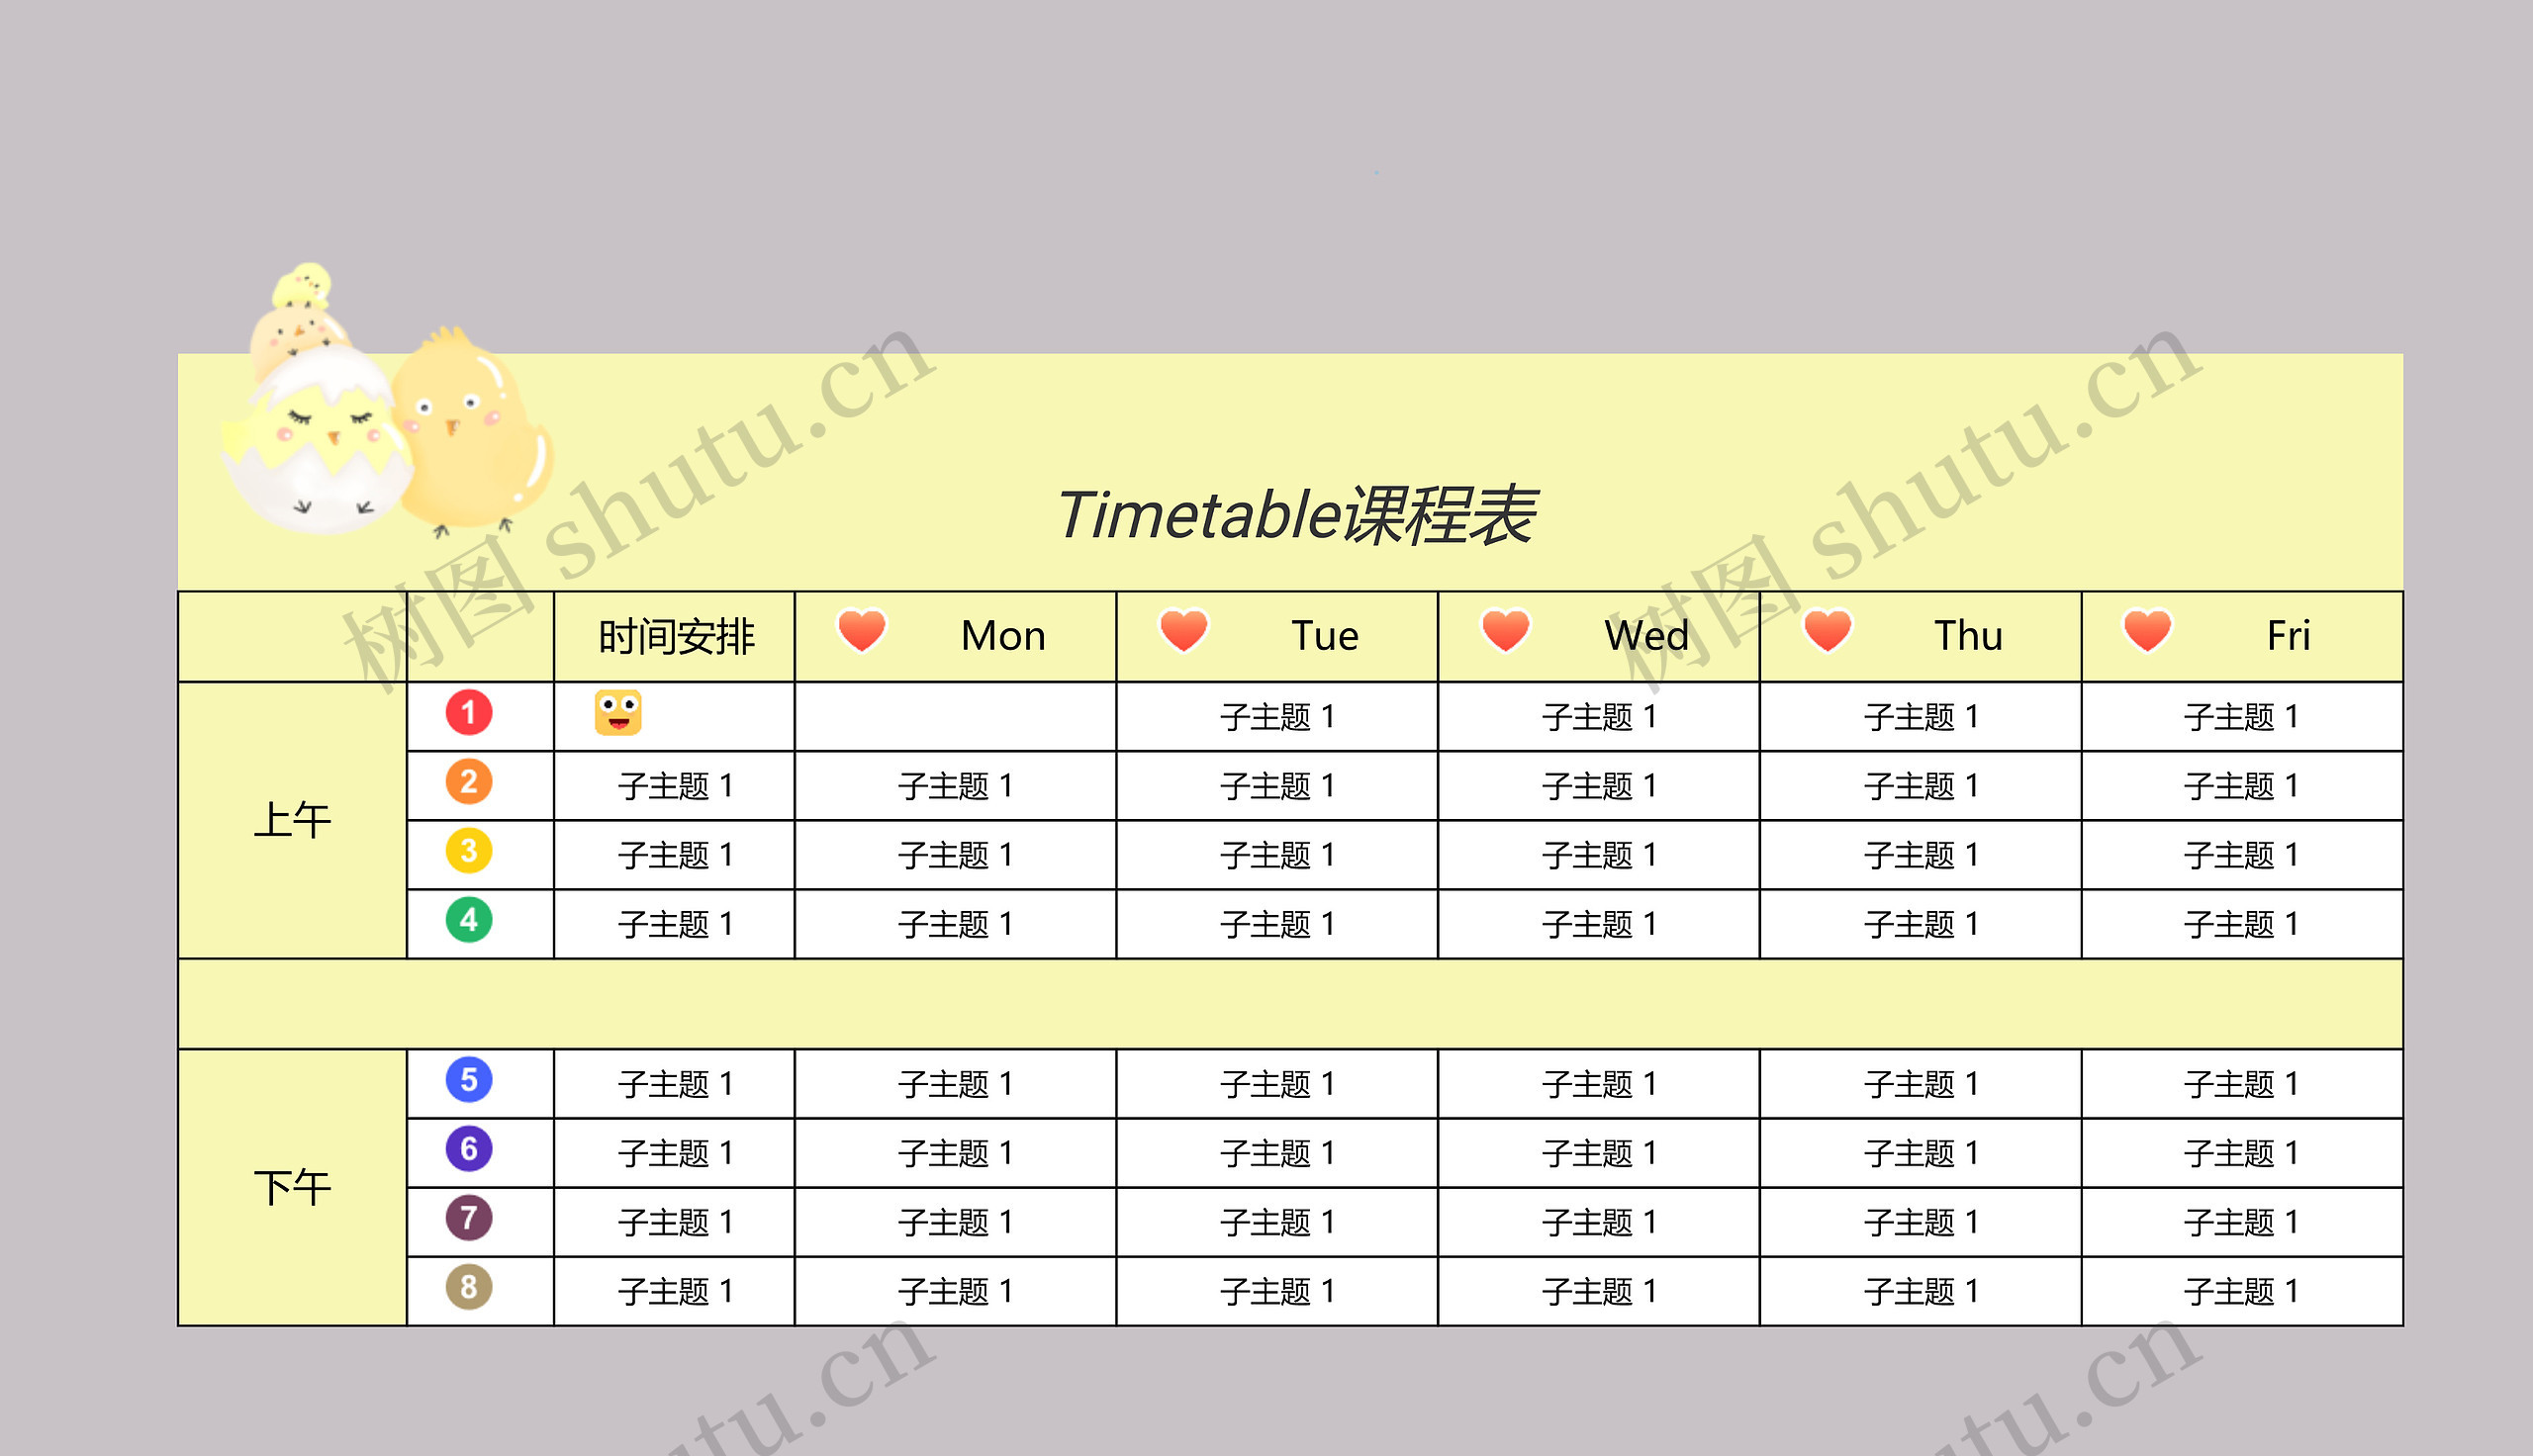 
Timetable课程表